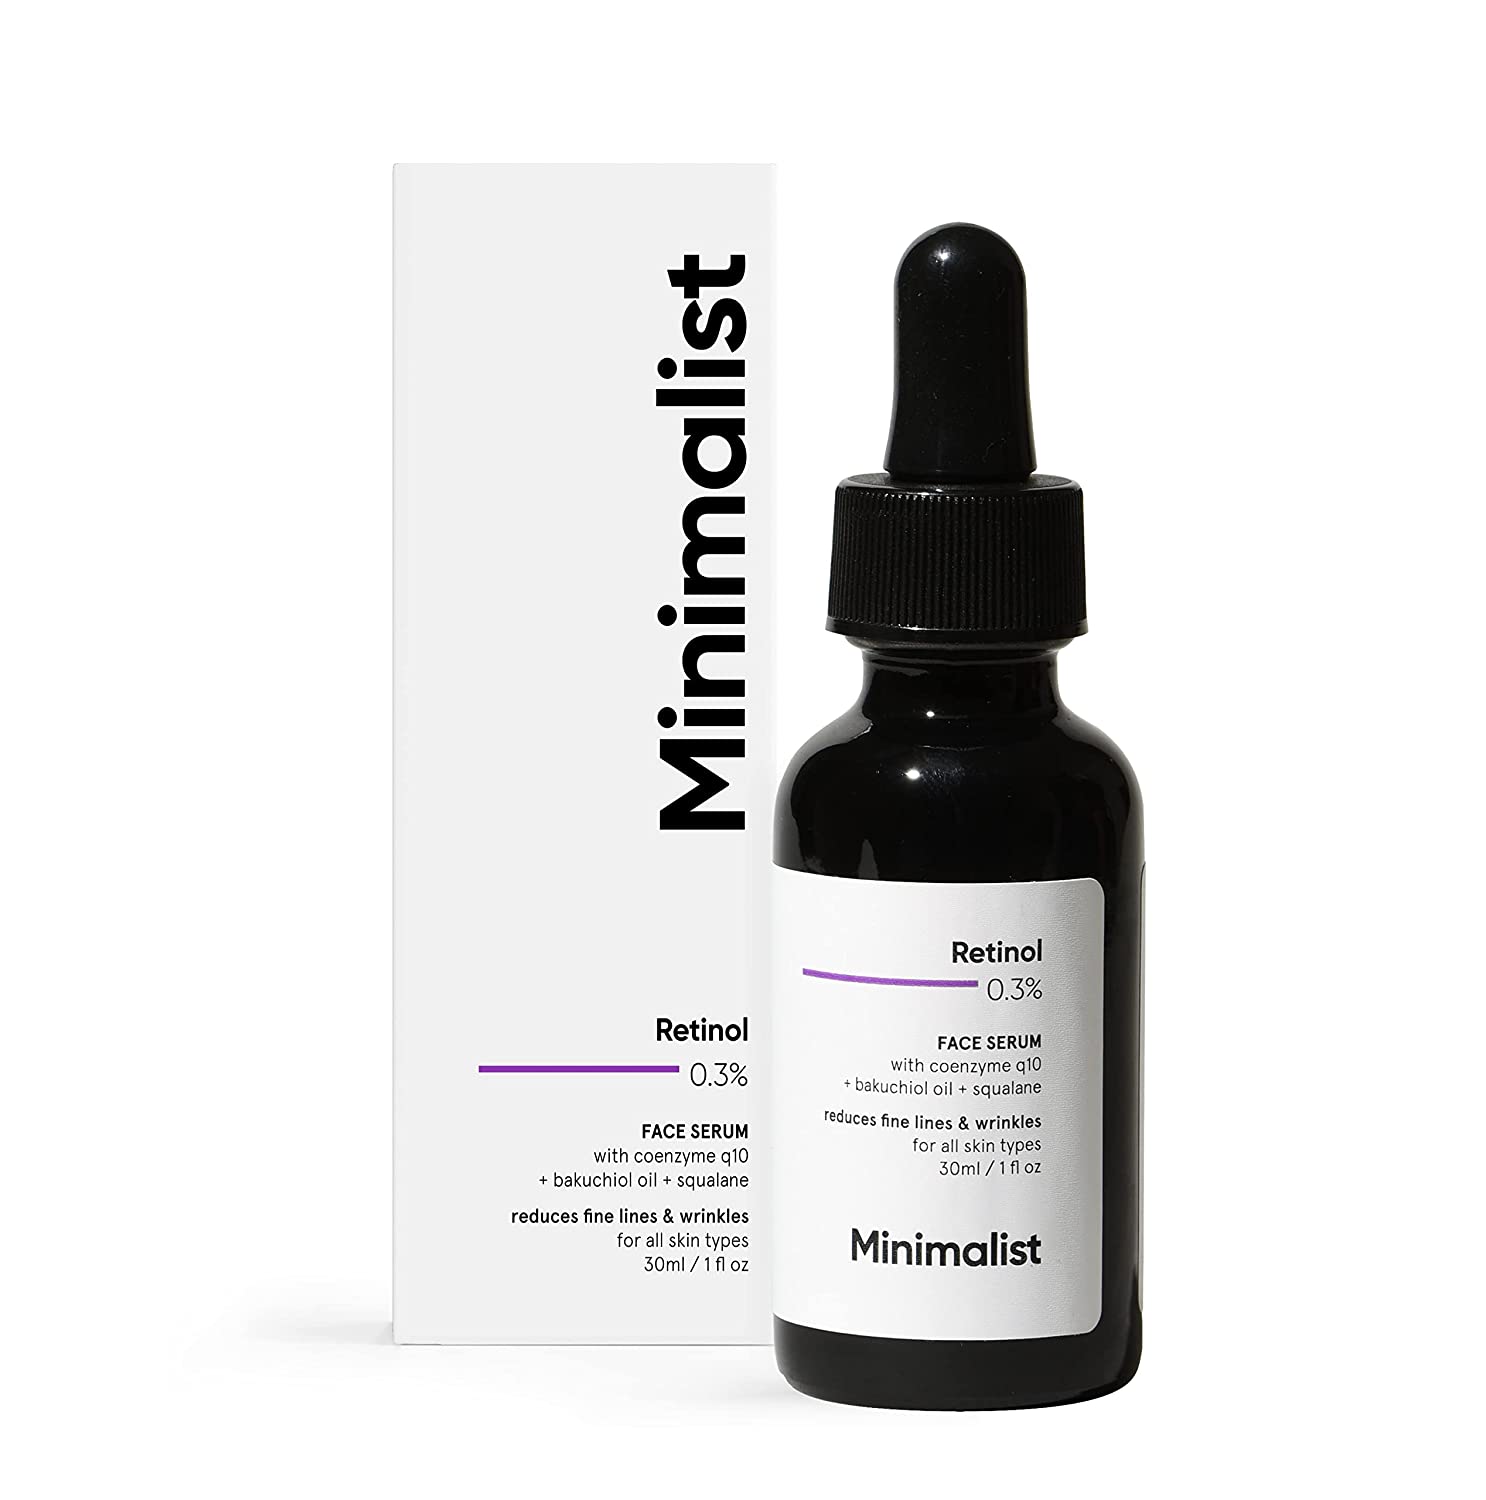 Minimalist 0.3% Retinol Face Serum